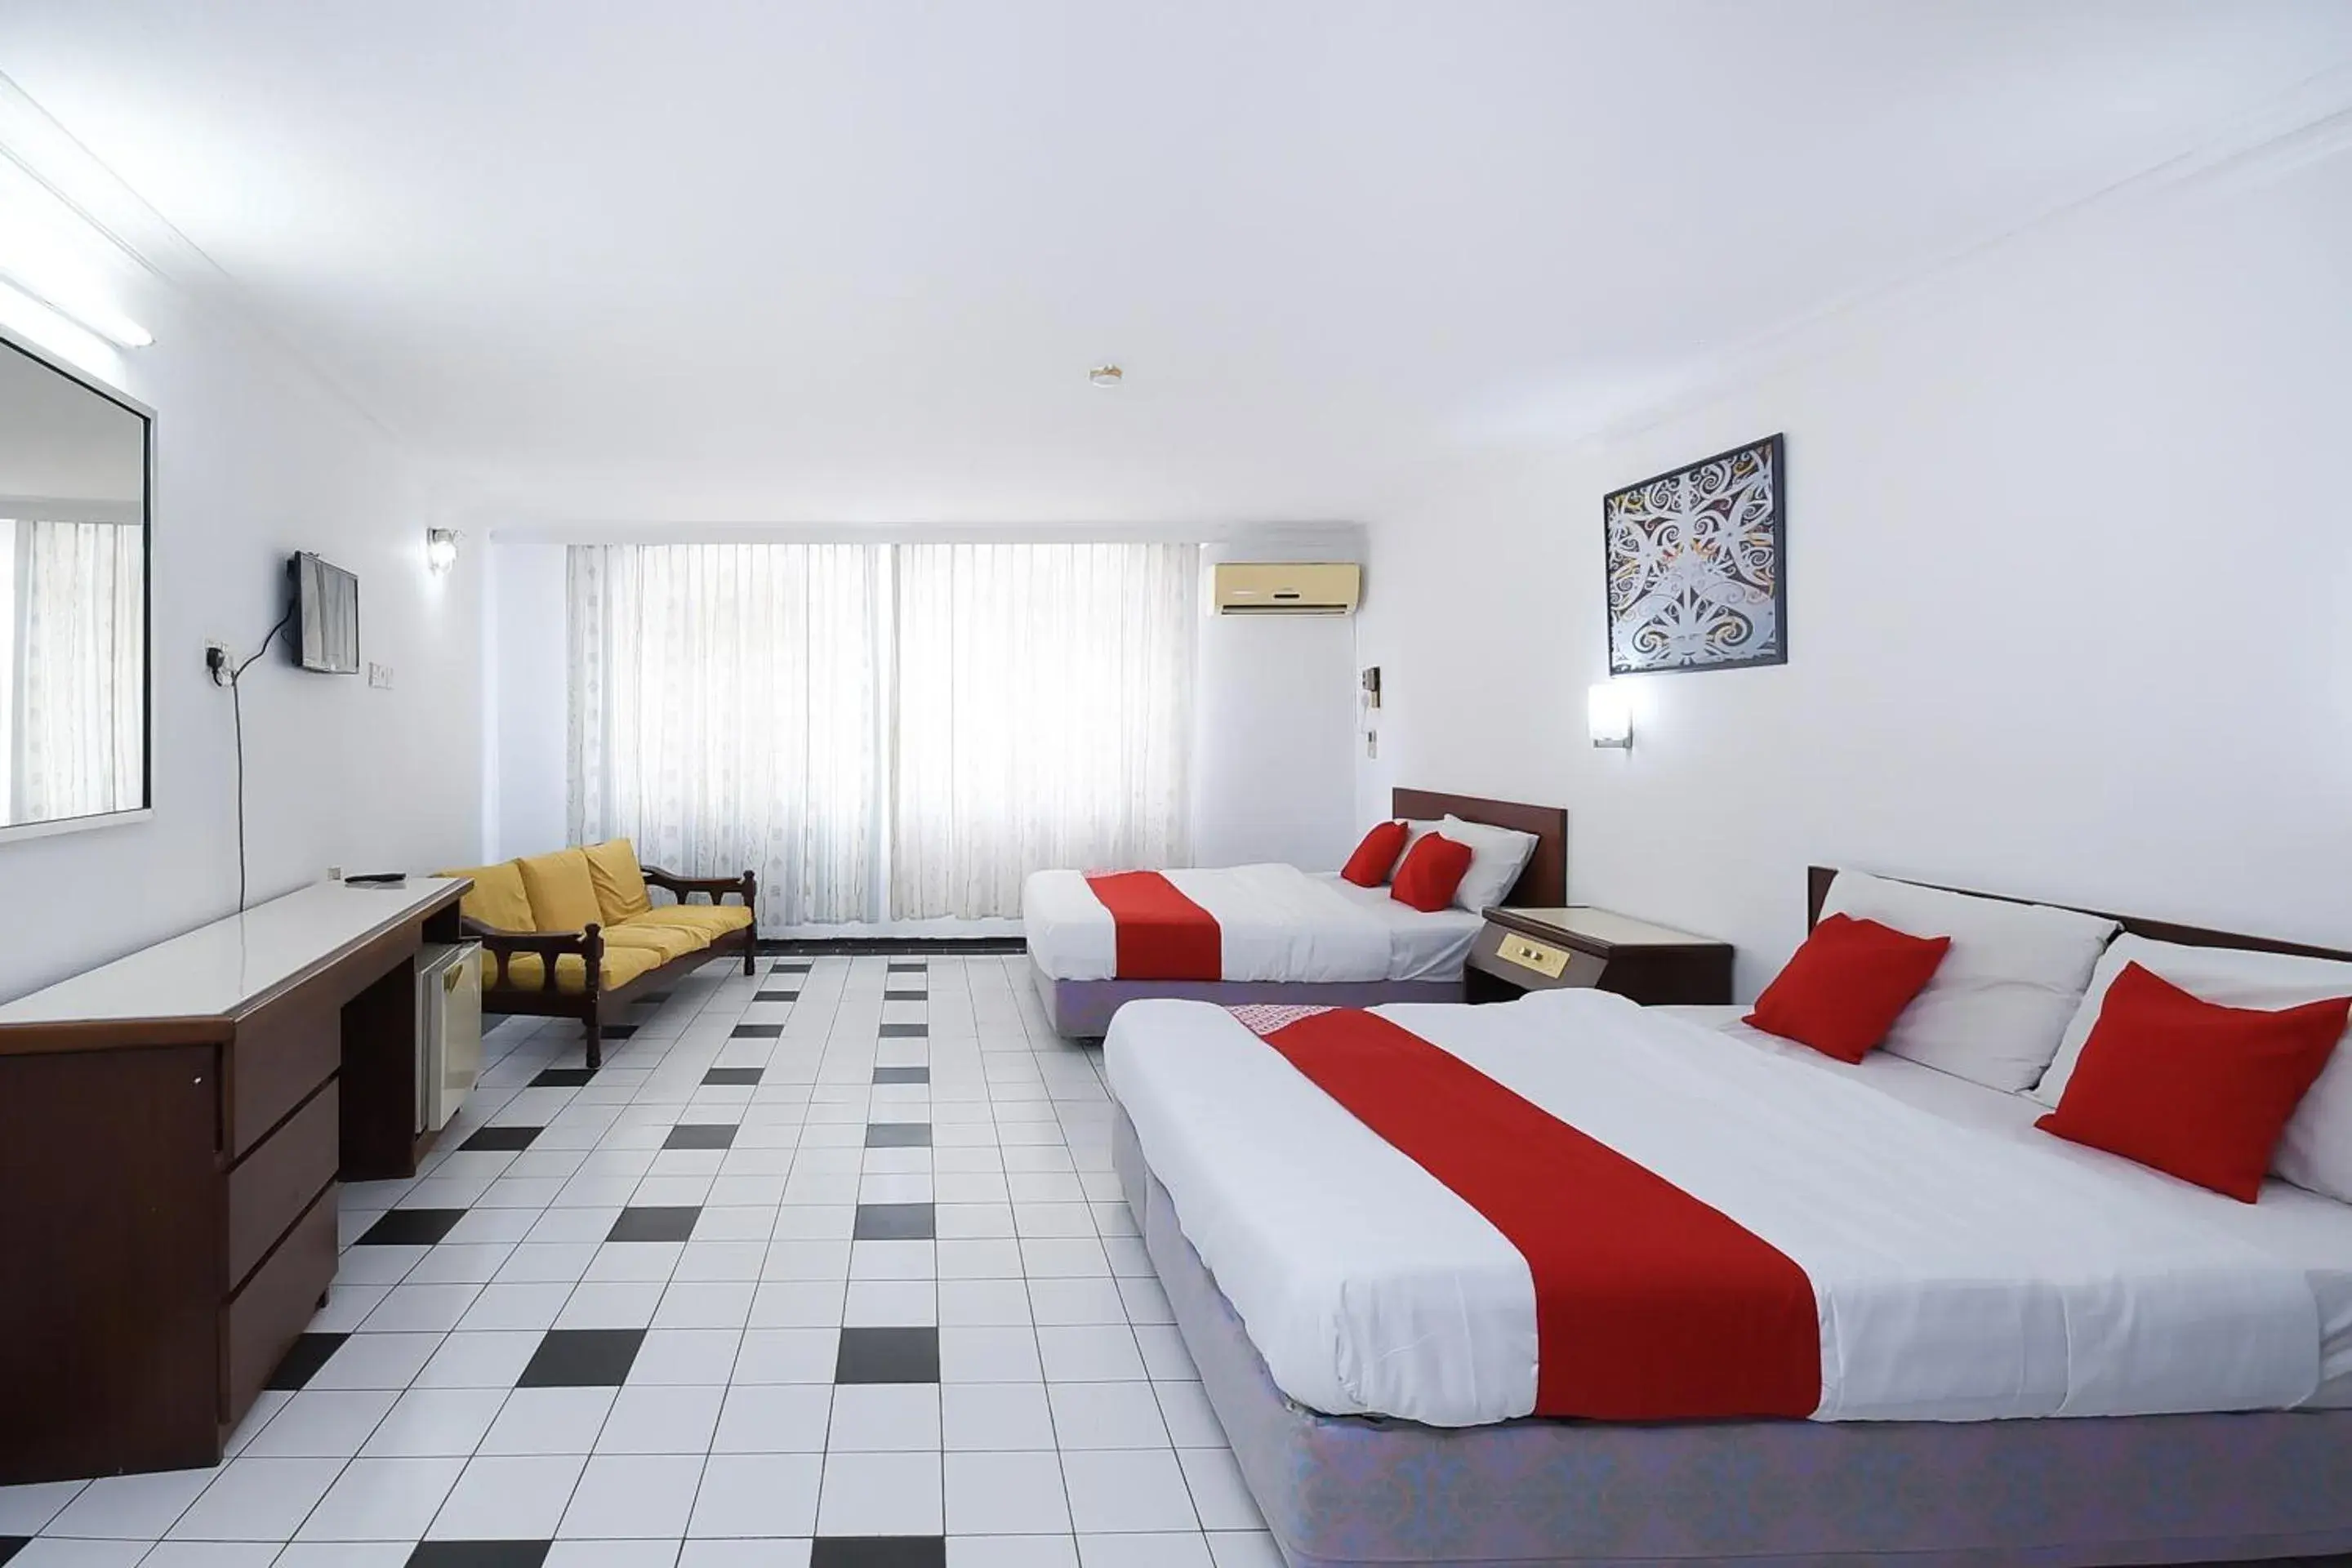 Bedroom, Room Photo in Super OYO 1018 Telang Usan Hotel Miri